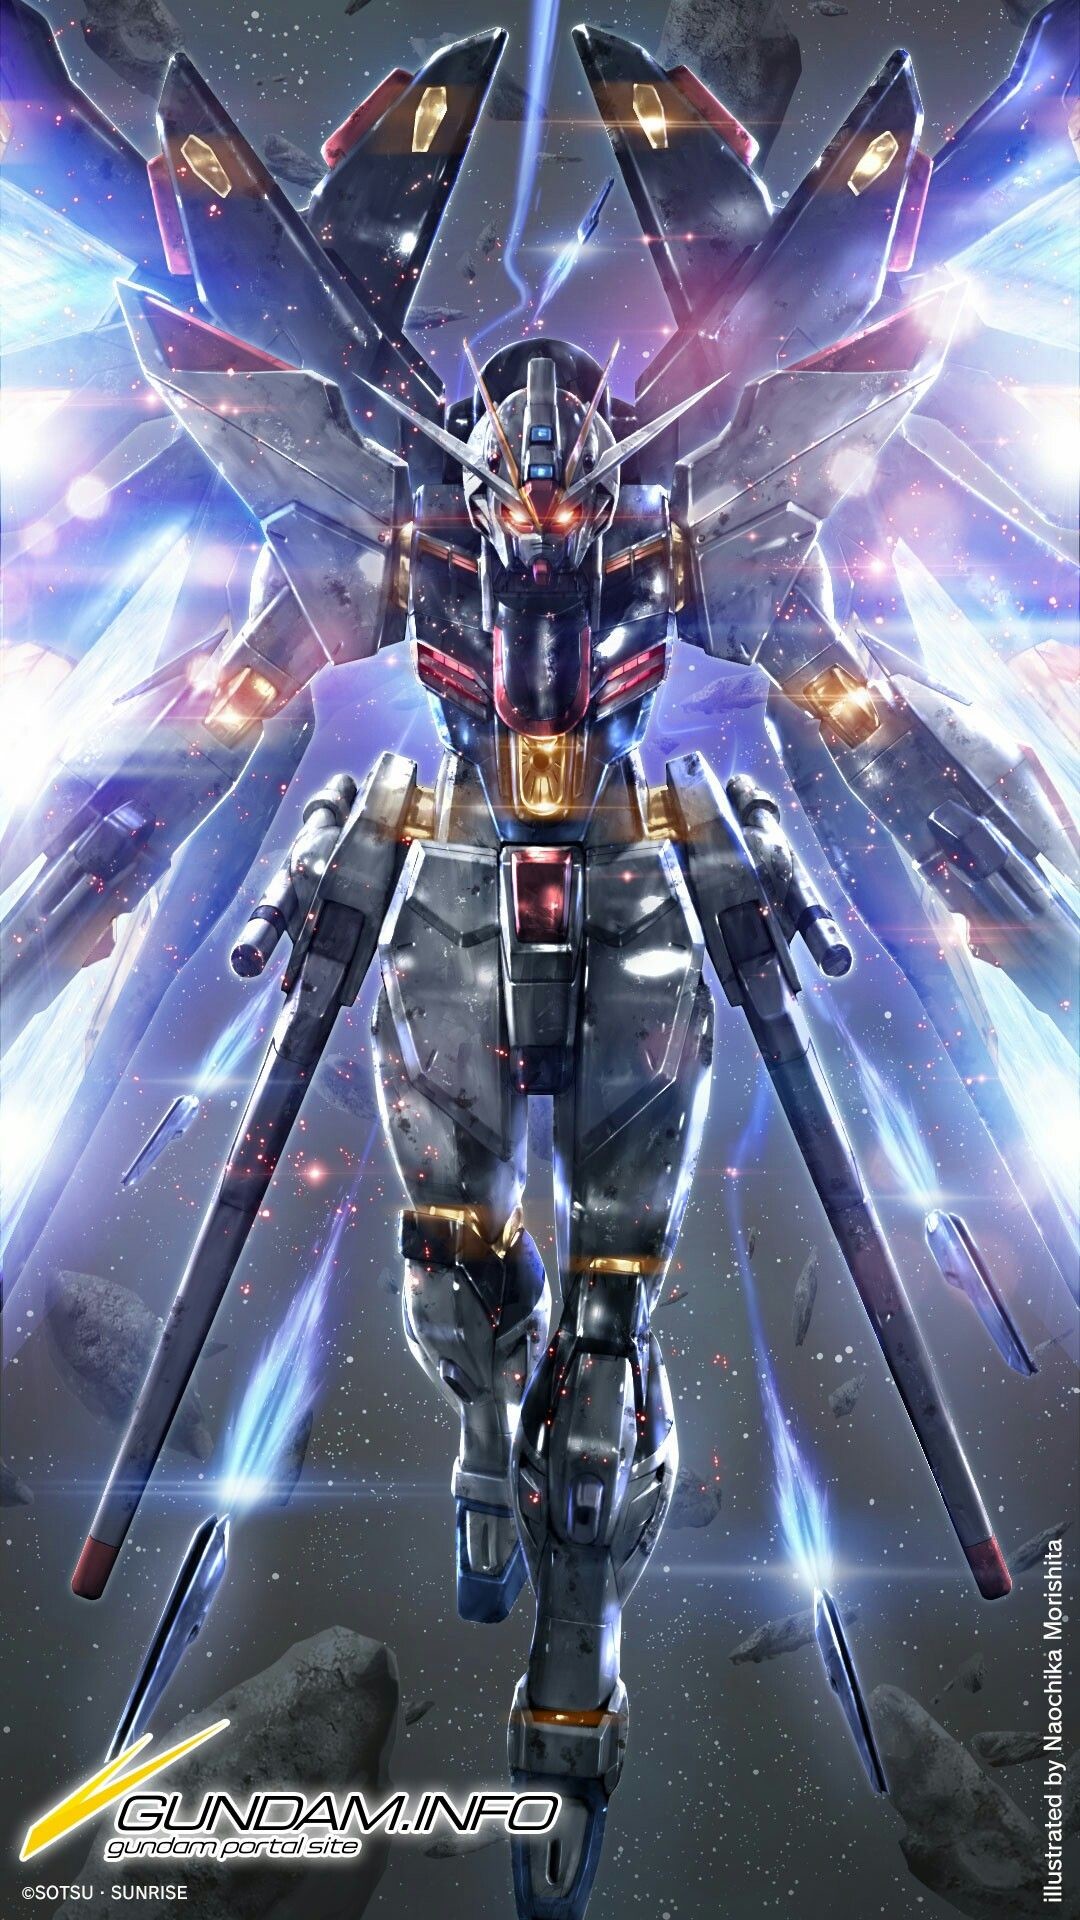 Gundam Seed Wallpaper Hd Android